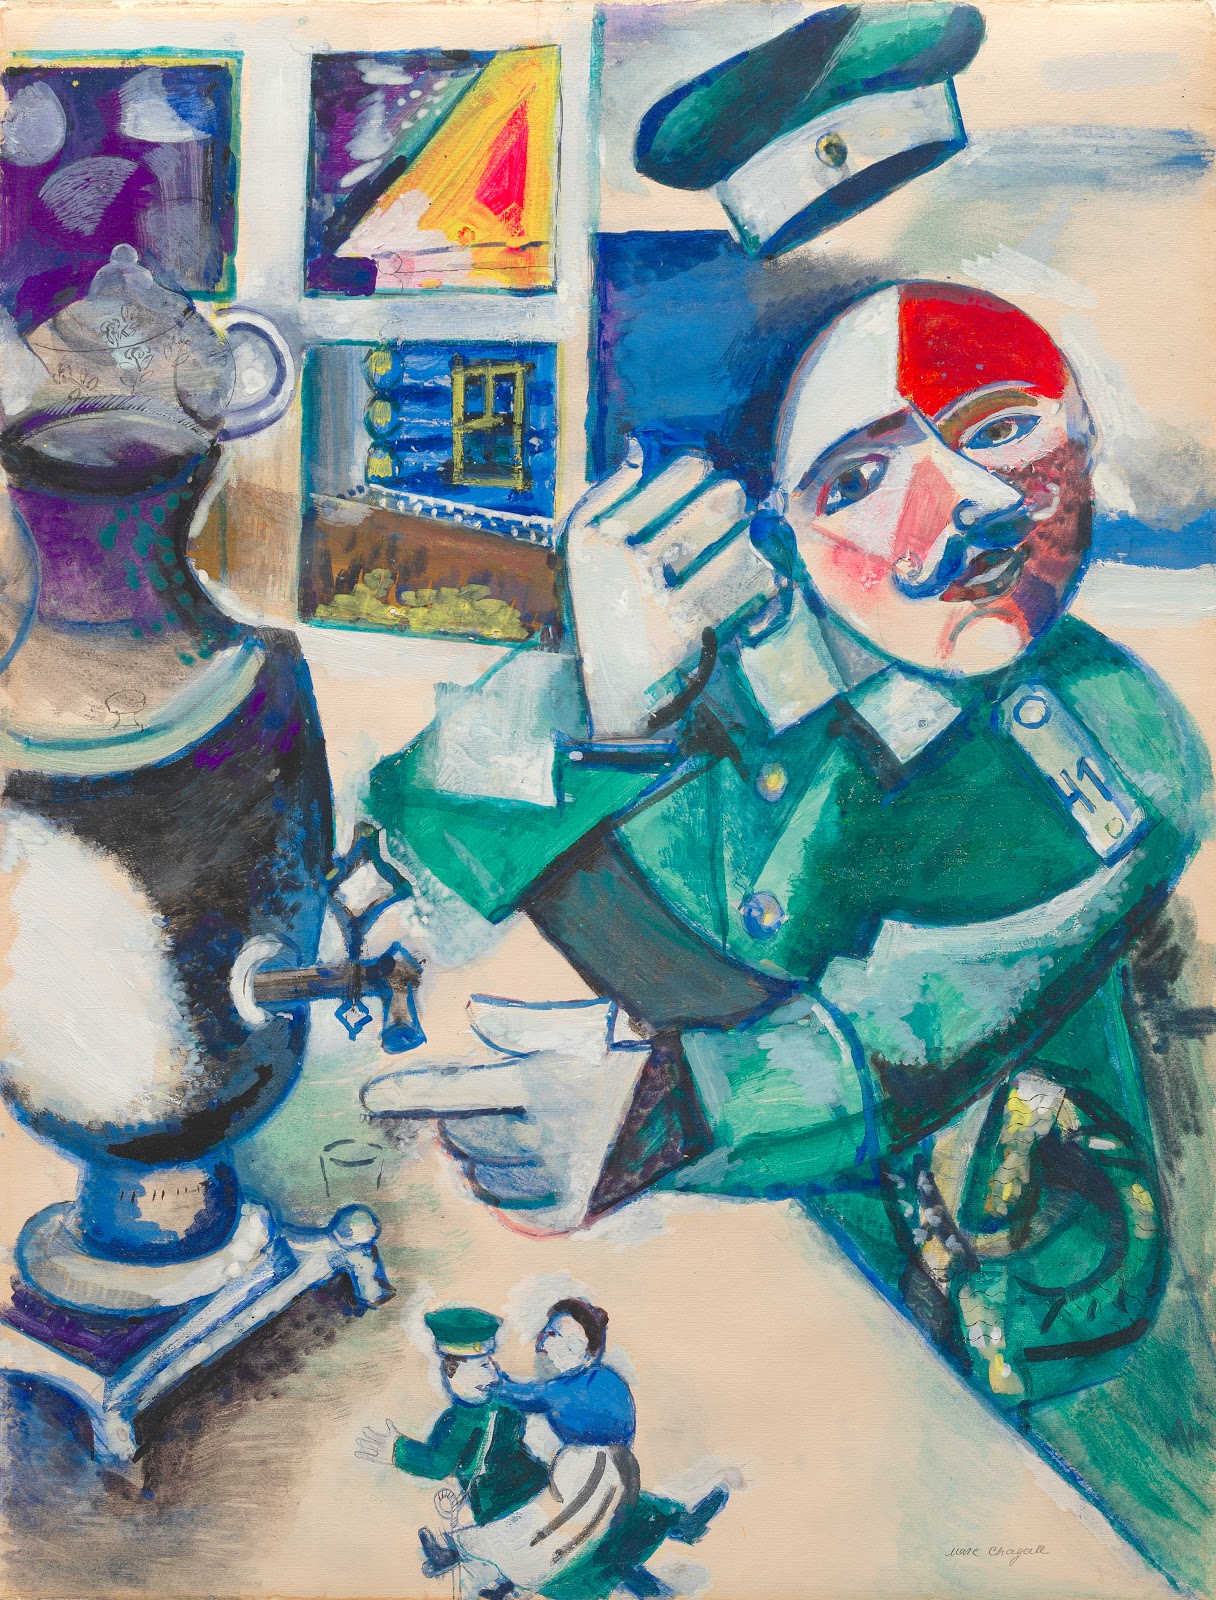 Marc+Chagall-1887-1985 (311).jpg